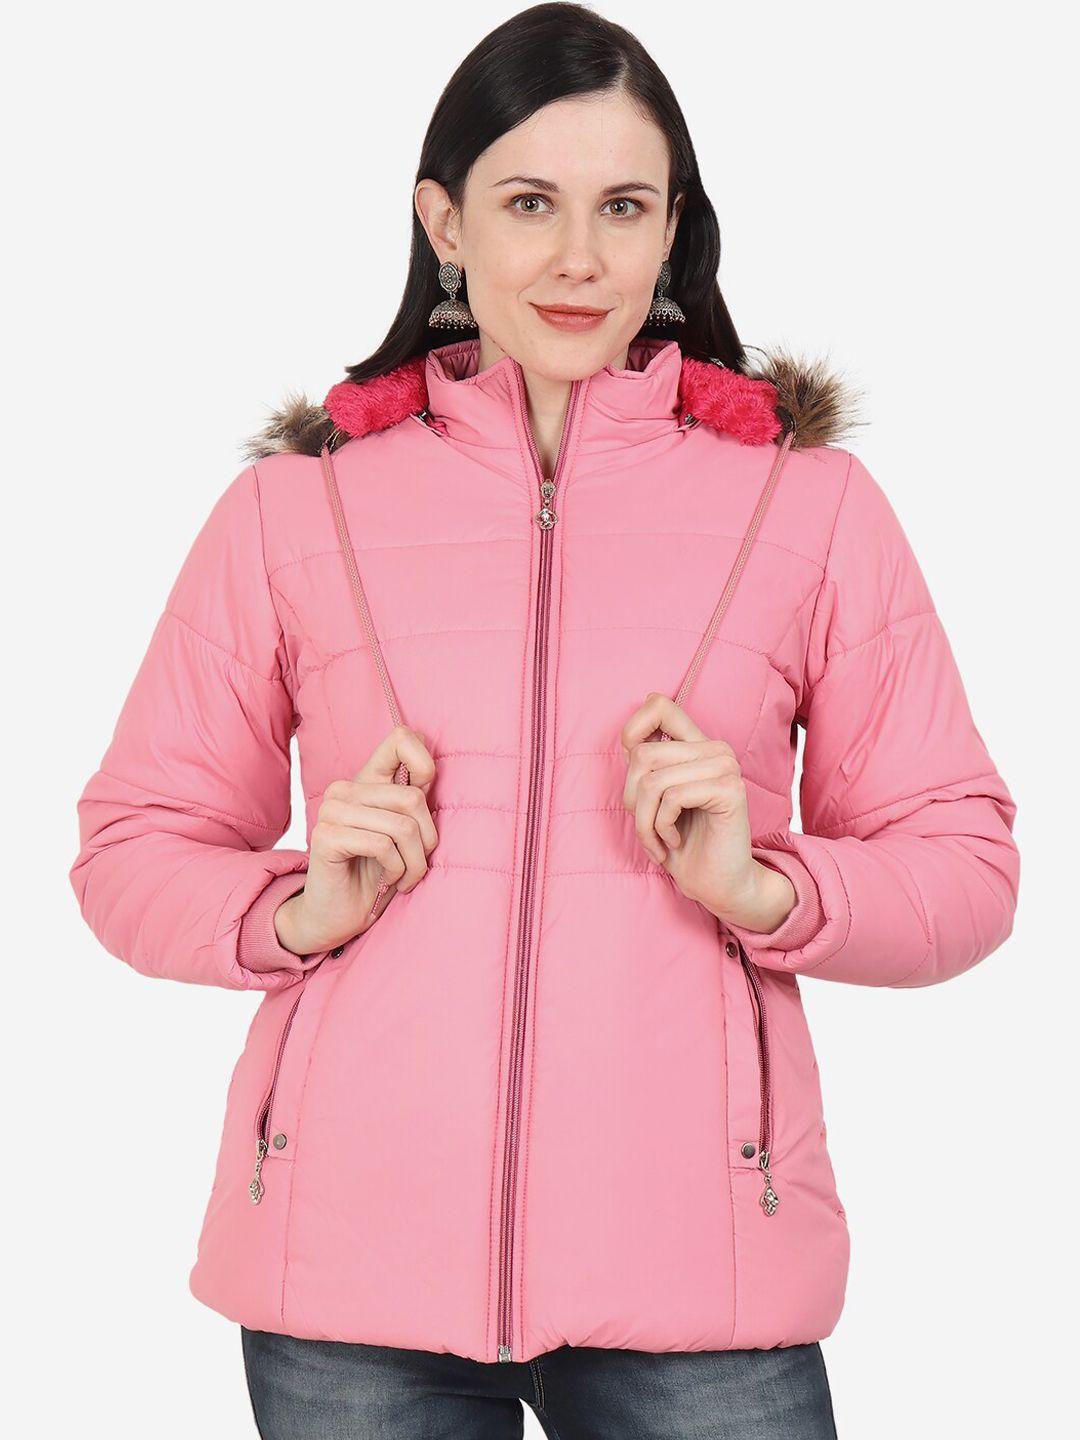 xohy women pink lightweight longline outdoor parka jacket